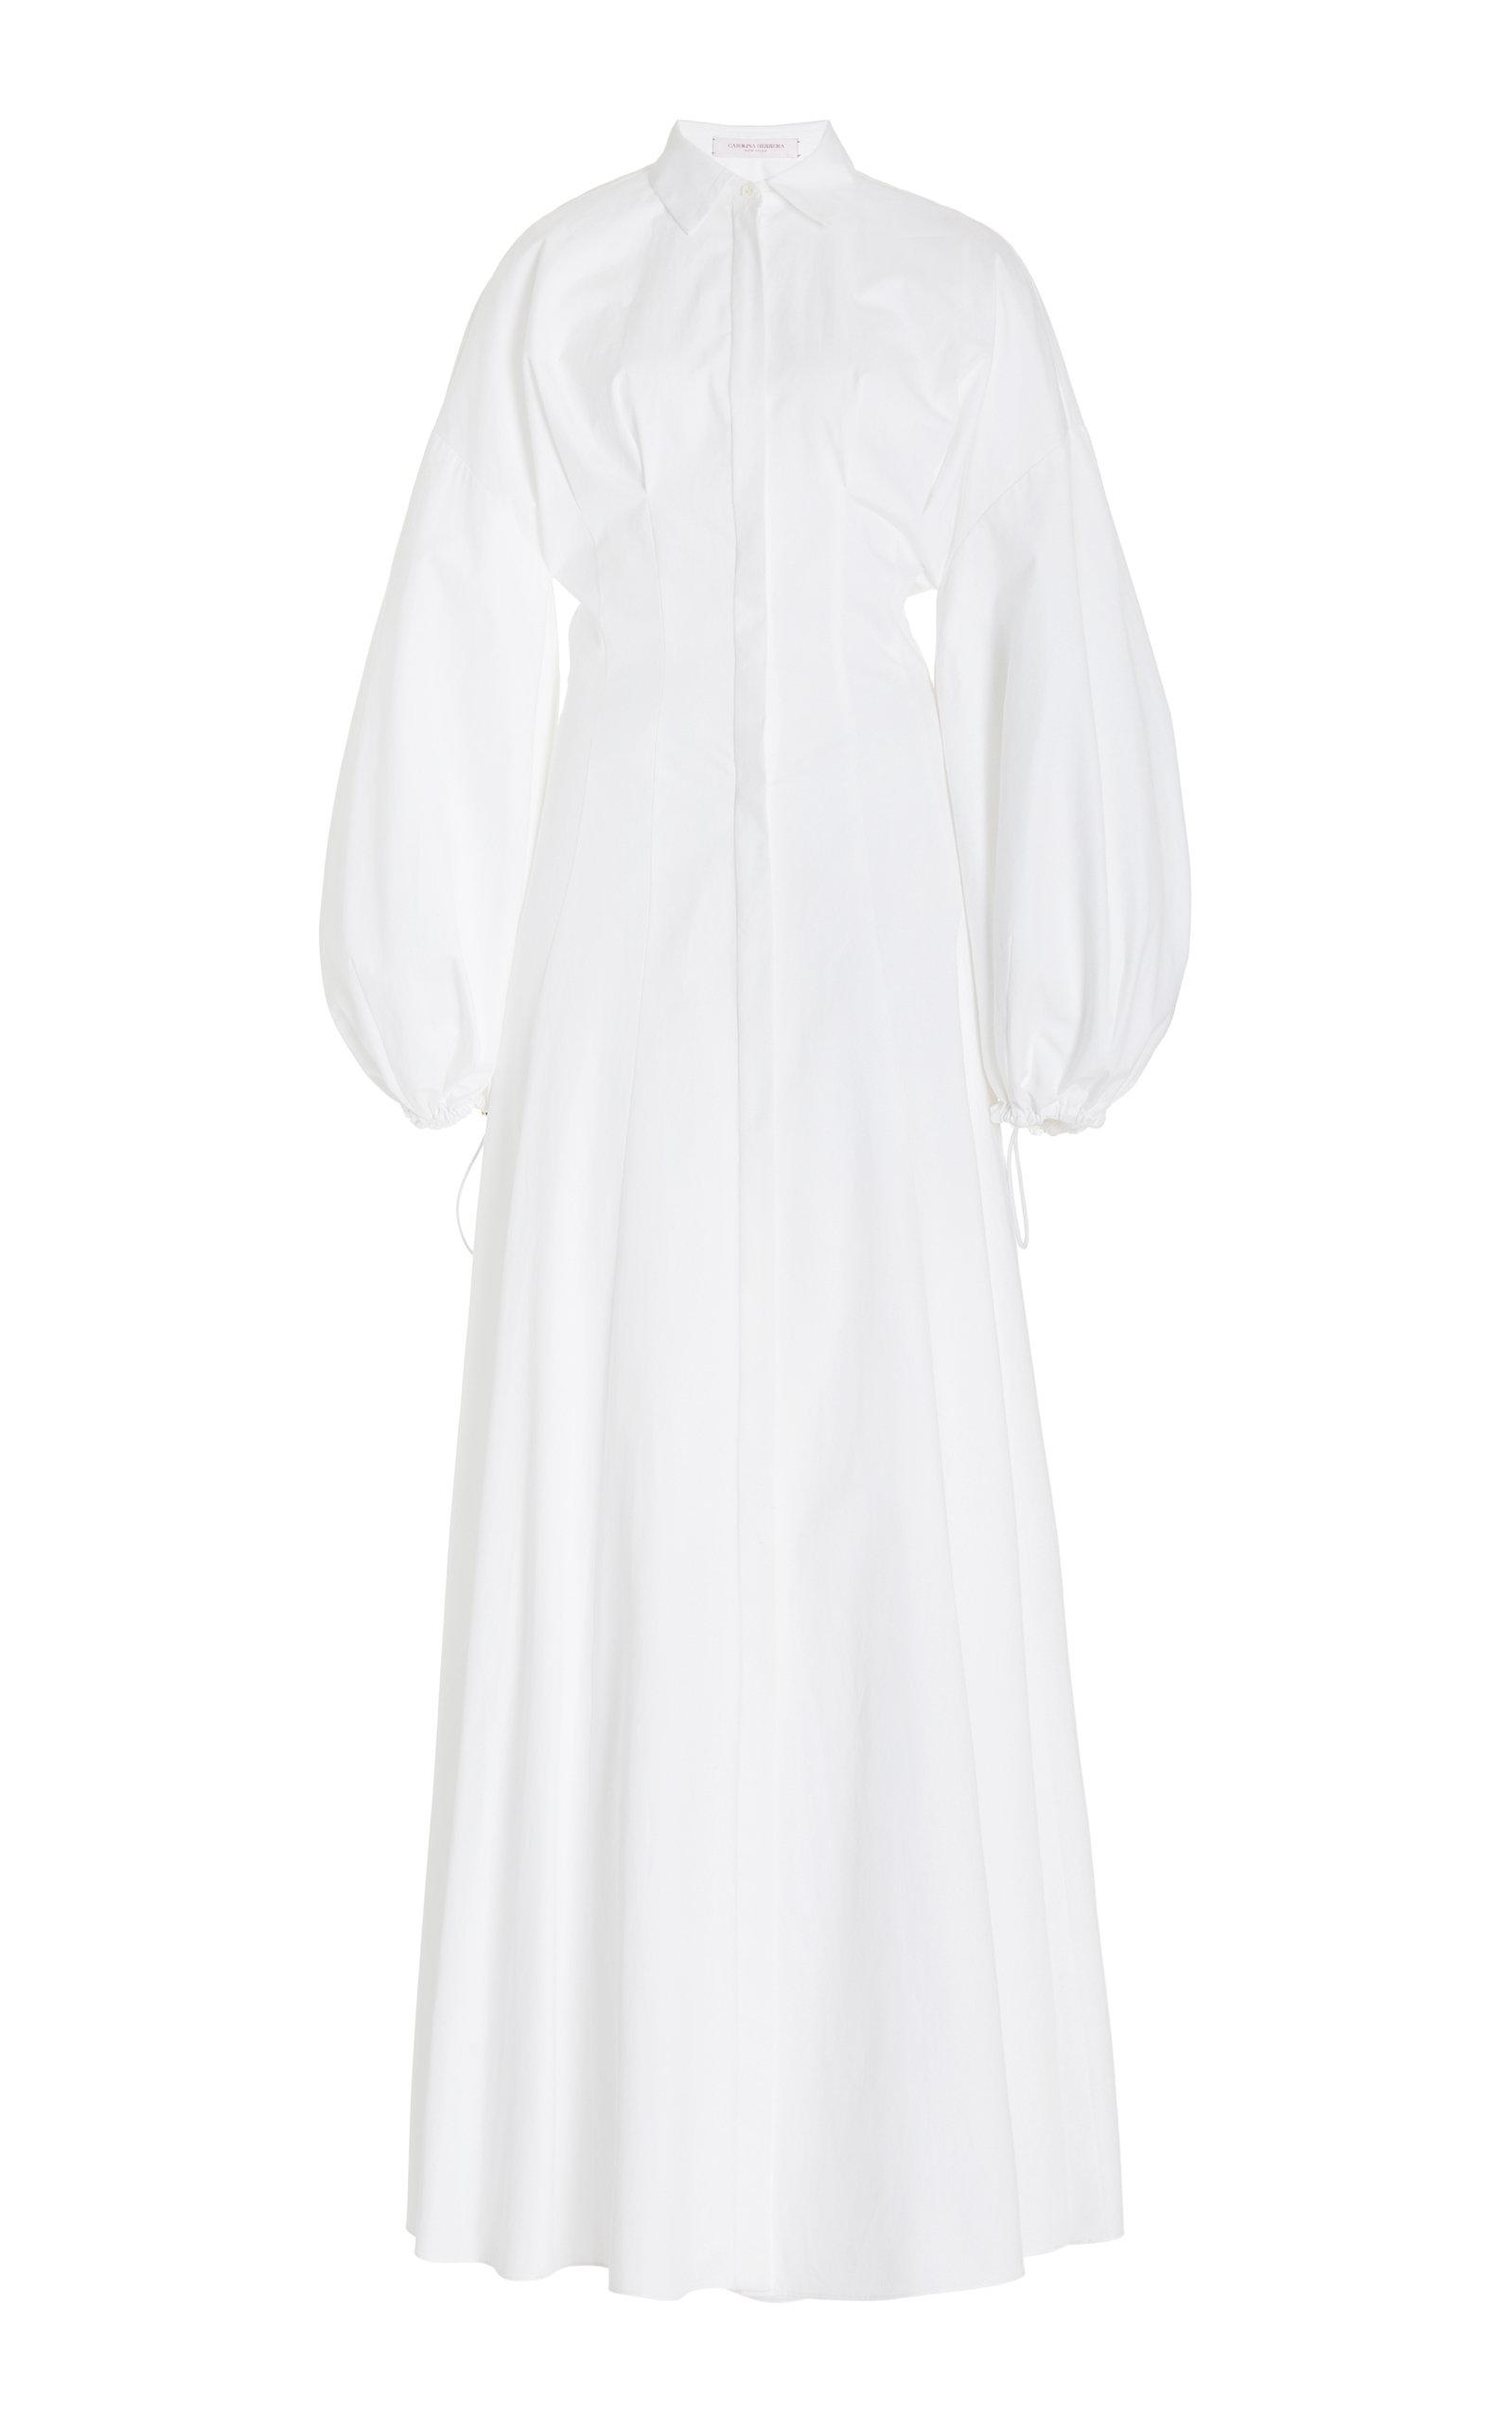 Carolina Herrera Collared Cotton Gown in White | Lyst